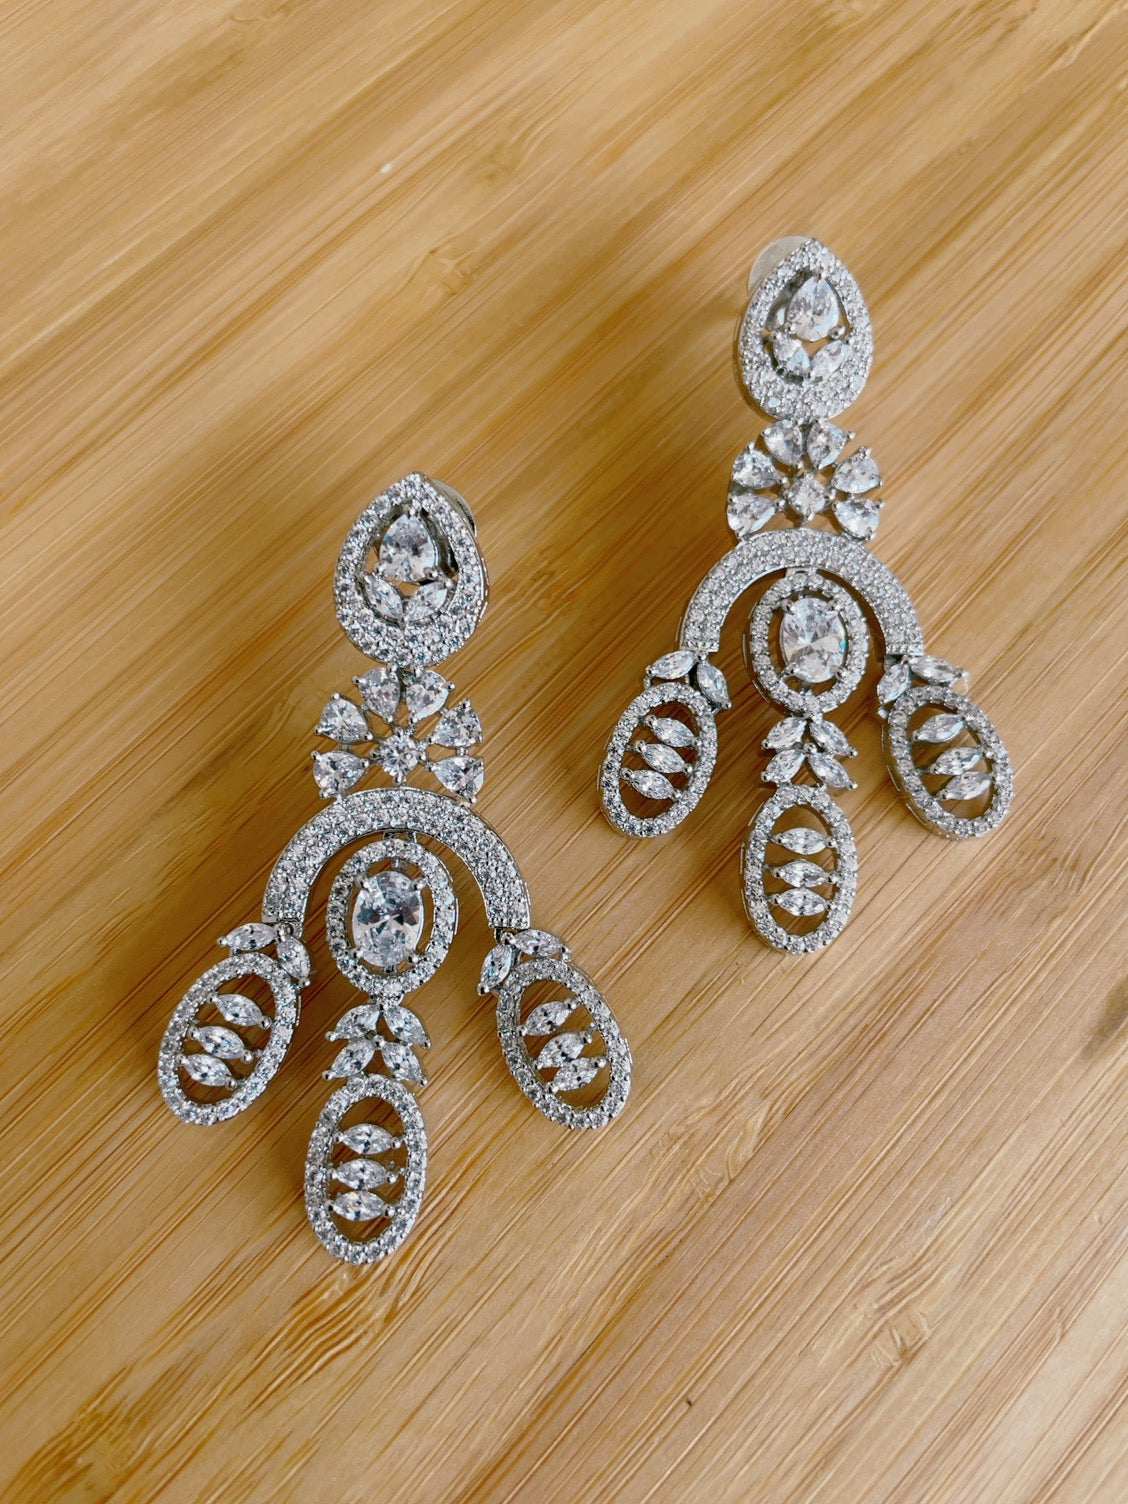 Gorgeous Diamond Studded Chandlier Red Carpet Jewel Earrings